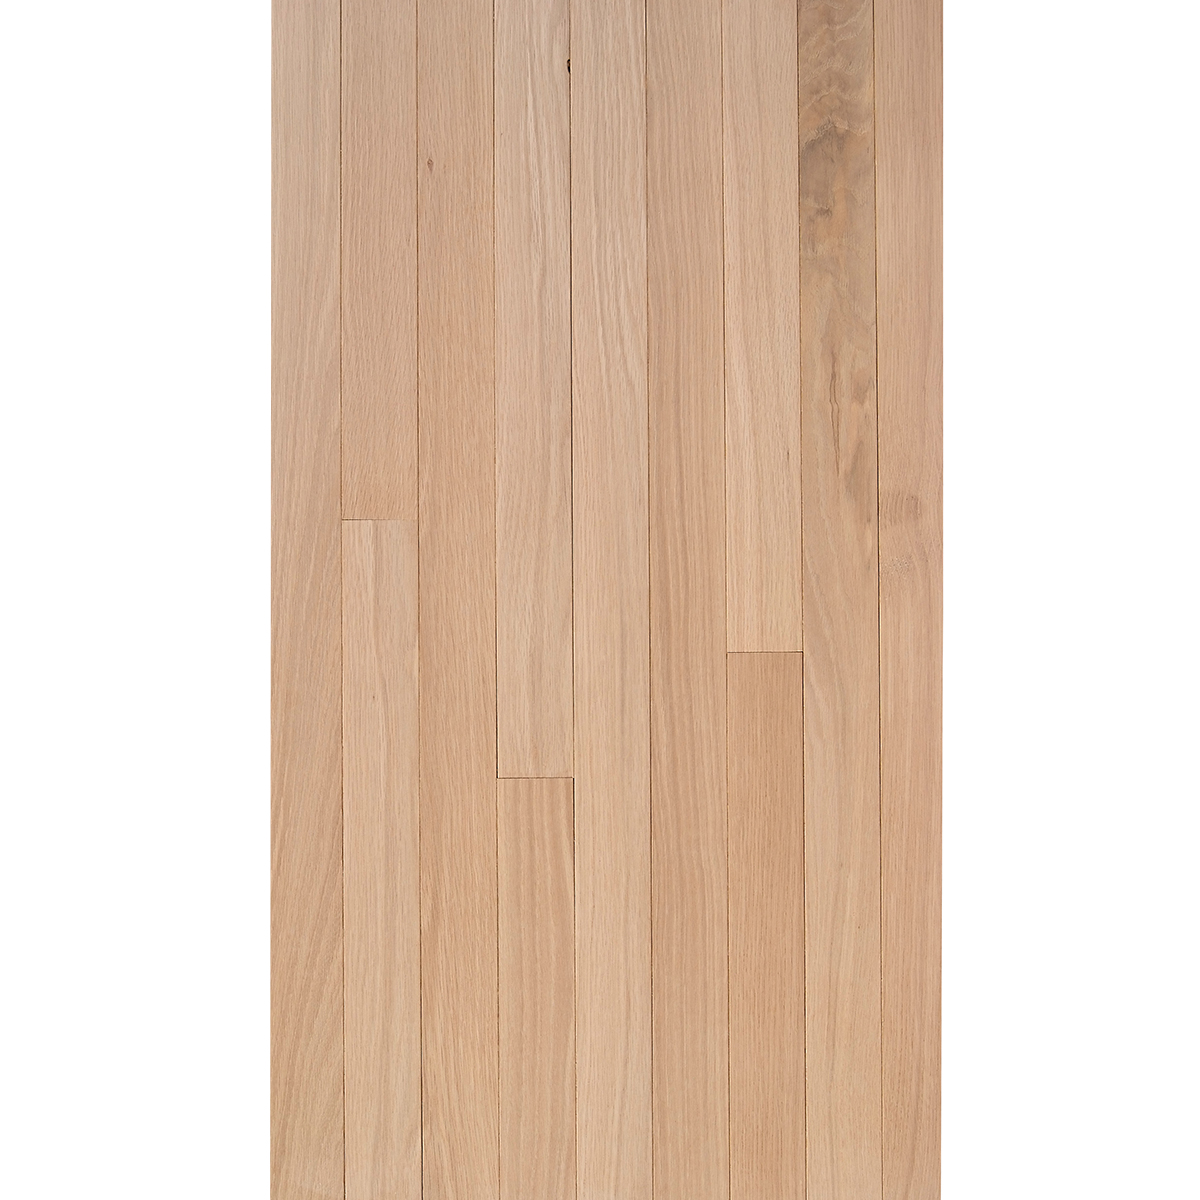 White Oak 3 4 X 2 1 Select Grade, 2 Inch Oak Hardwood Flooring